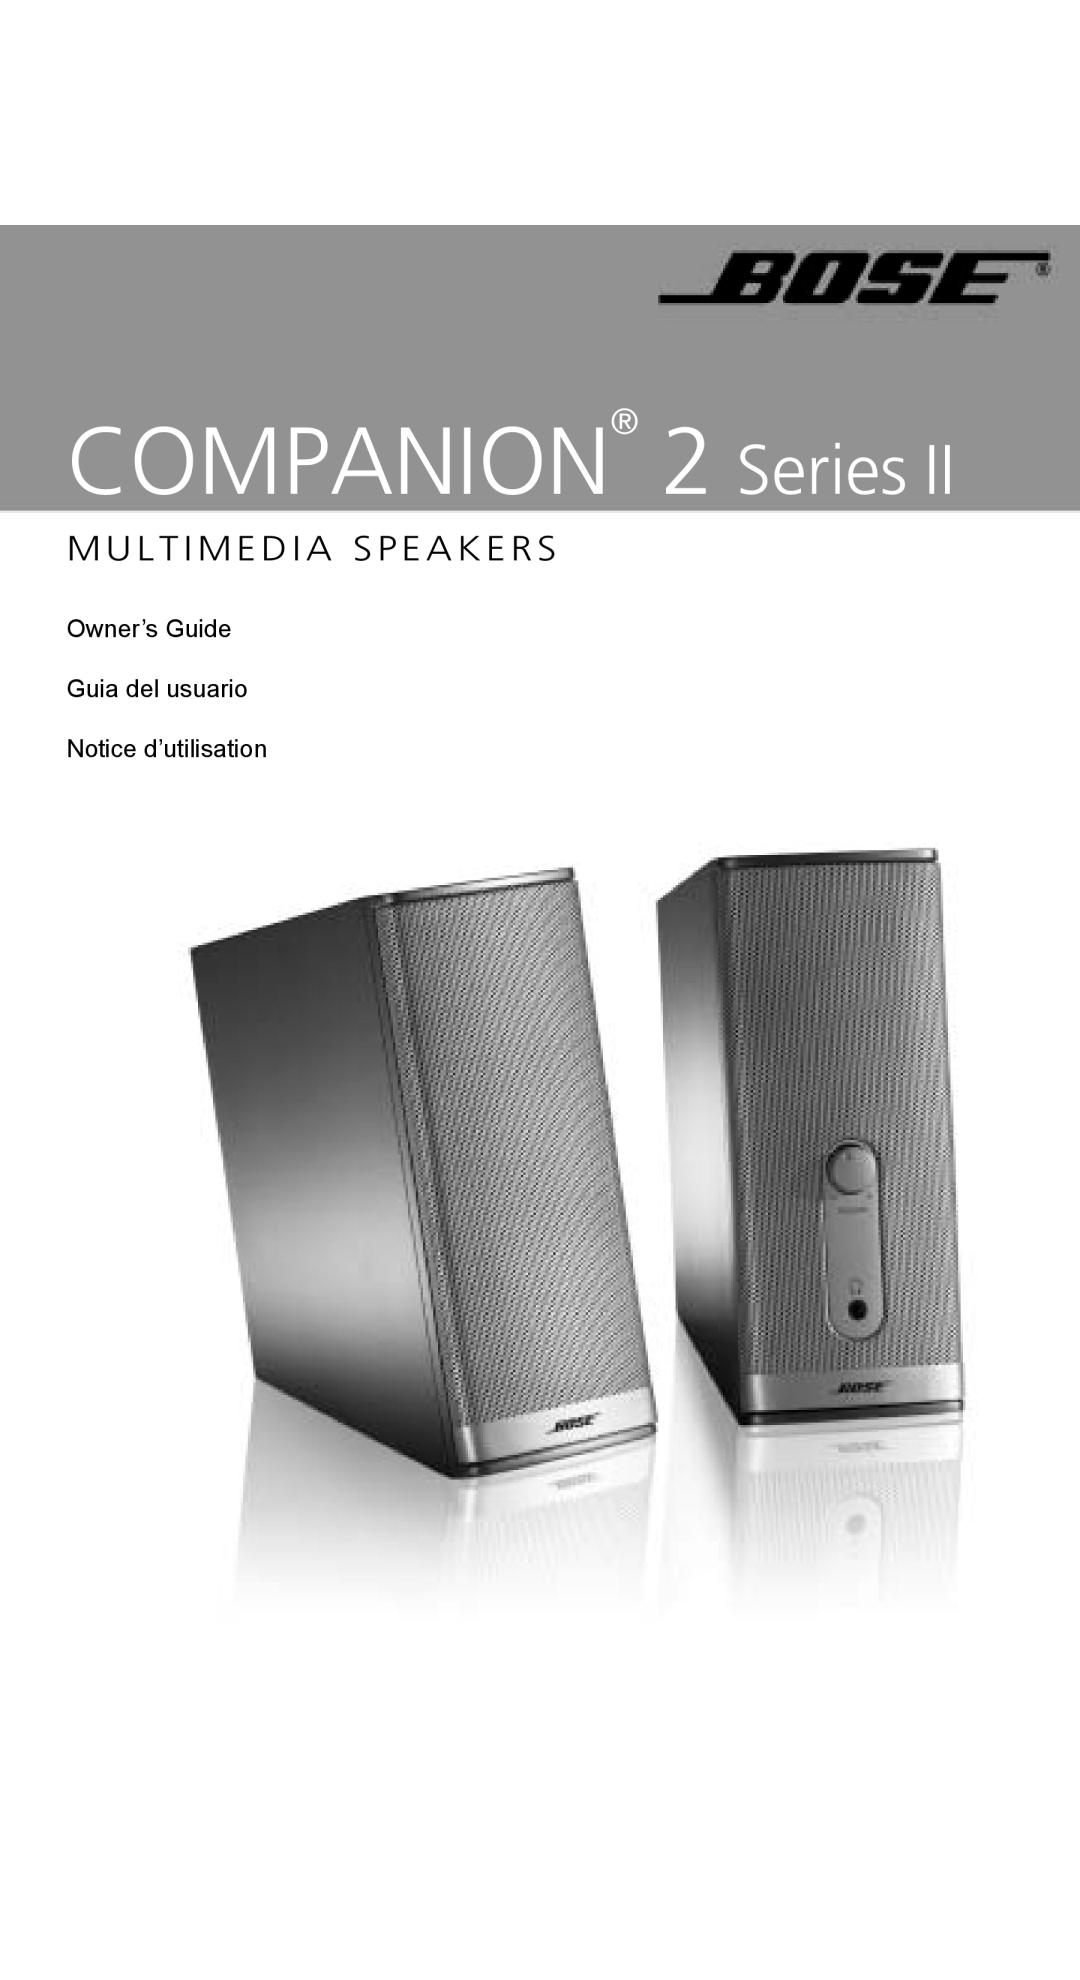 Bose 40274 manual COMPANION 2 Series, Multimedia Speakers, Owner’s Guide Guia del usuario, Notice d’utilisation 